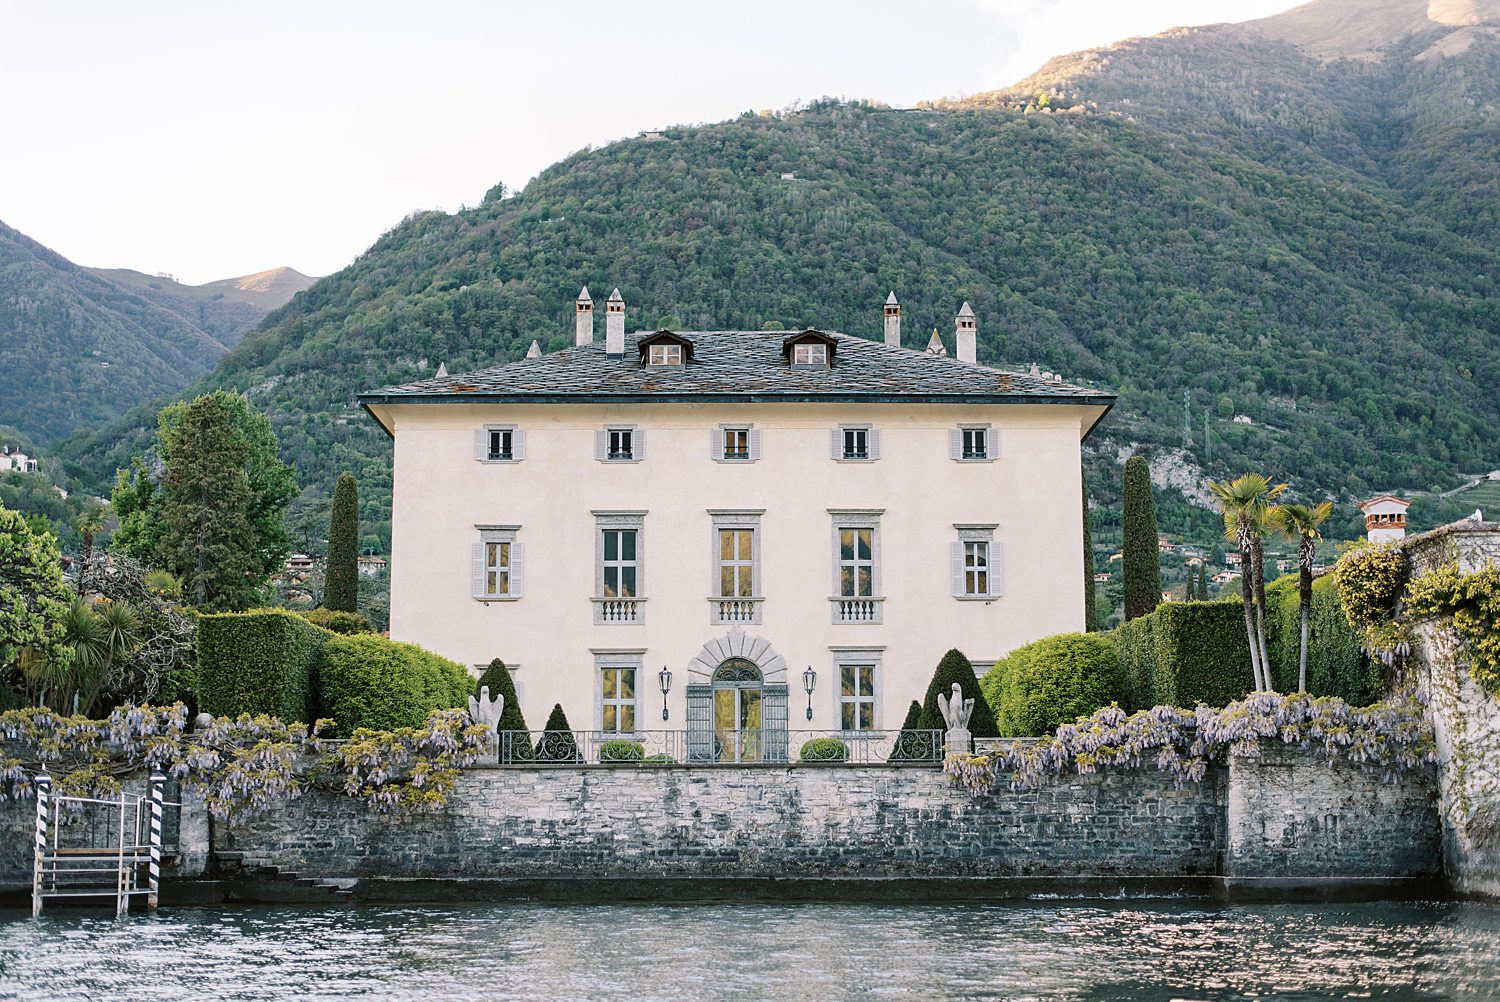 Villa Balbiano rests on Lake Como